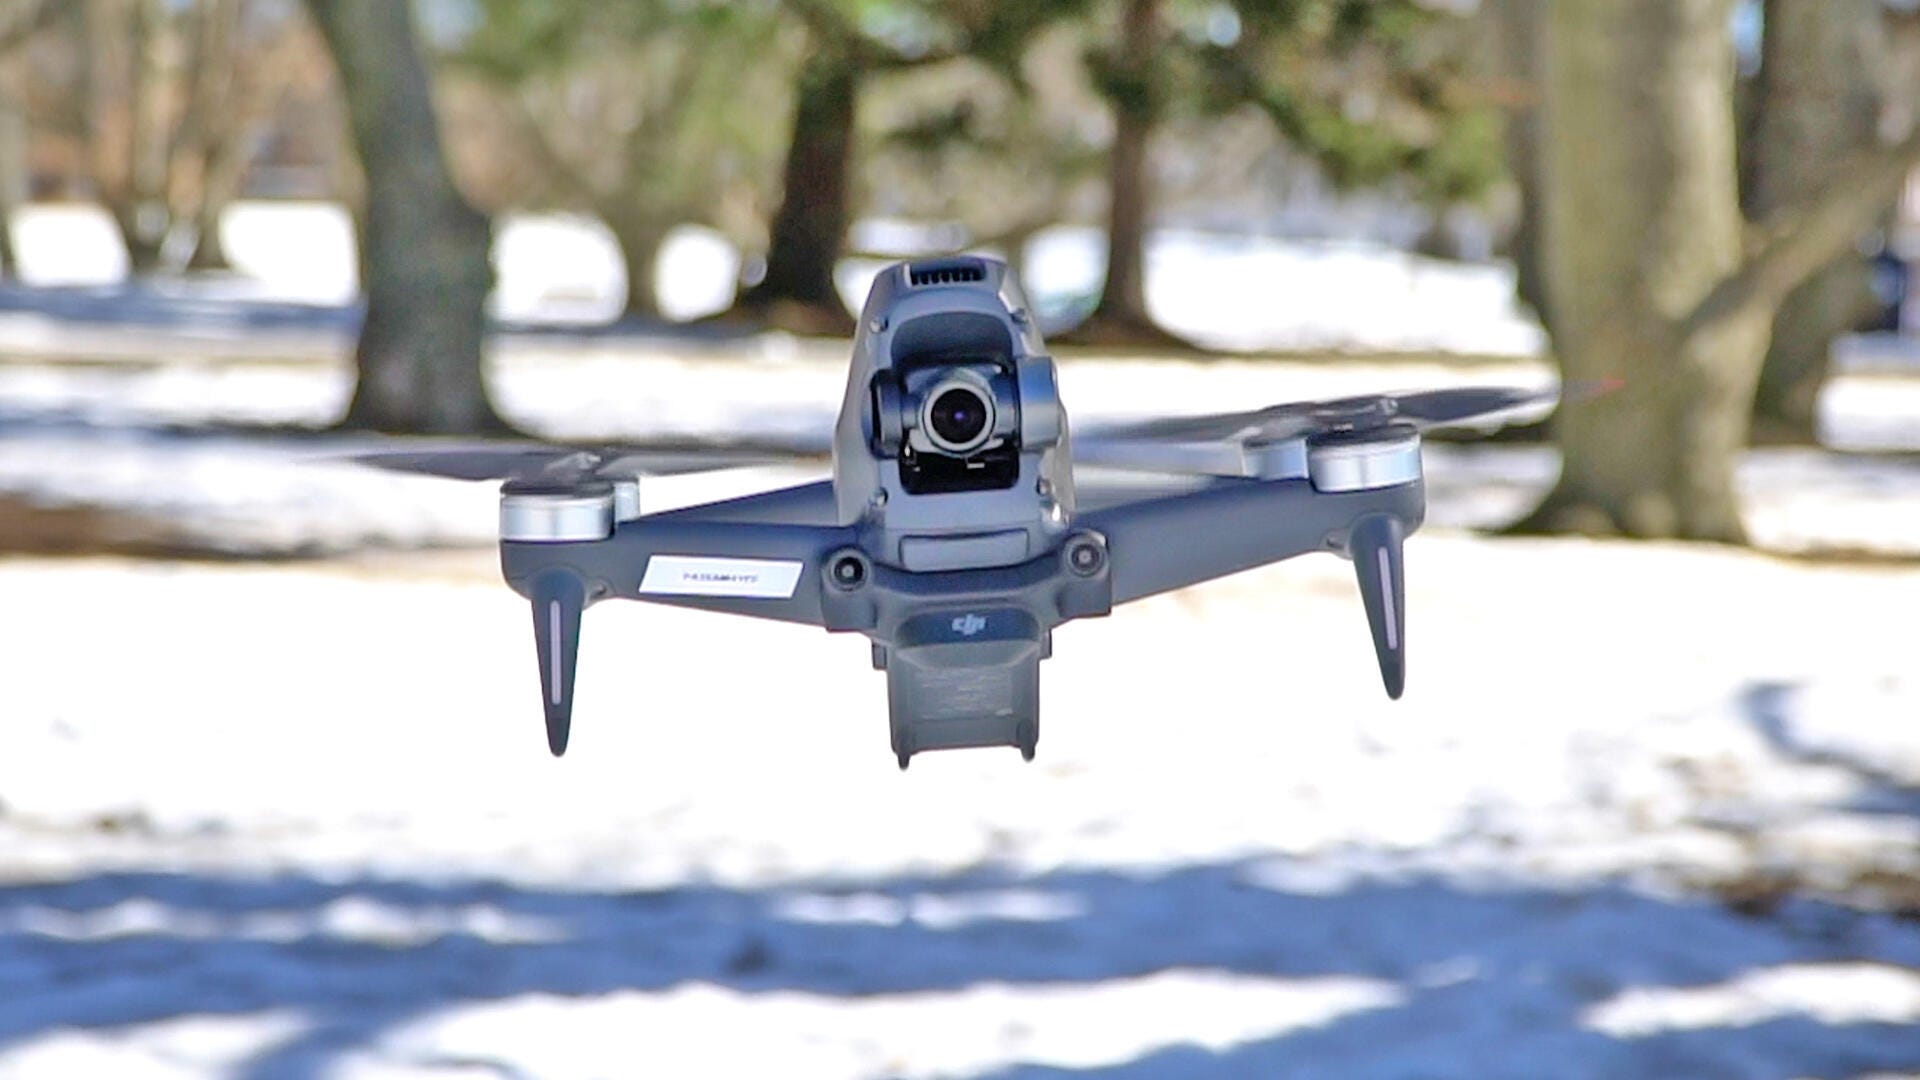 DJI Avata FPV Drone is Smaller, Lighter and Safer - CNET